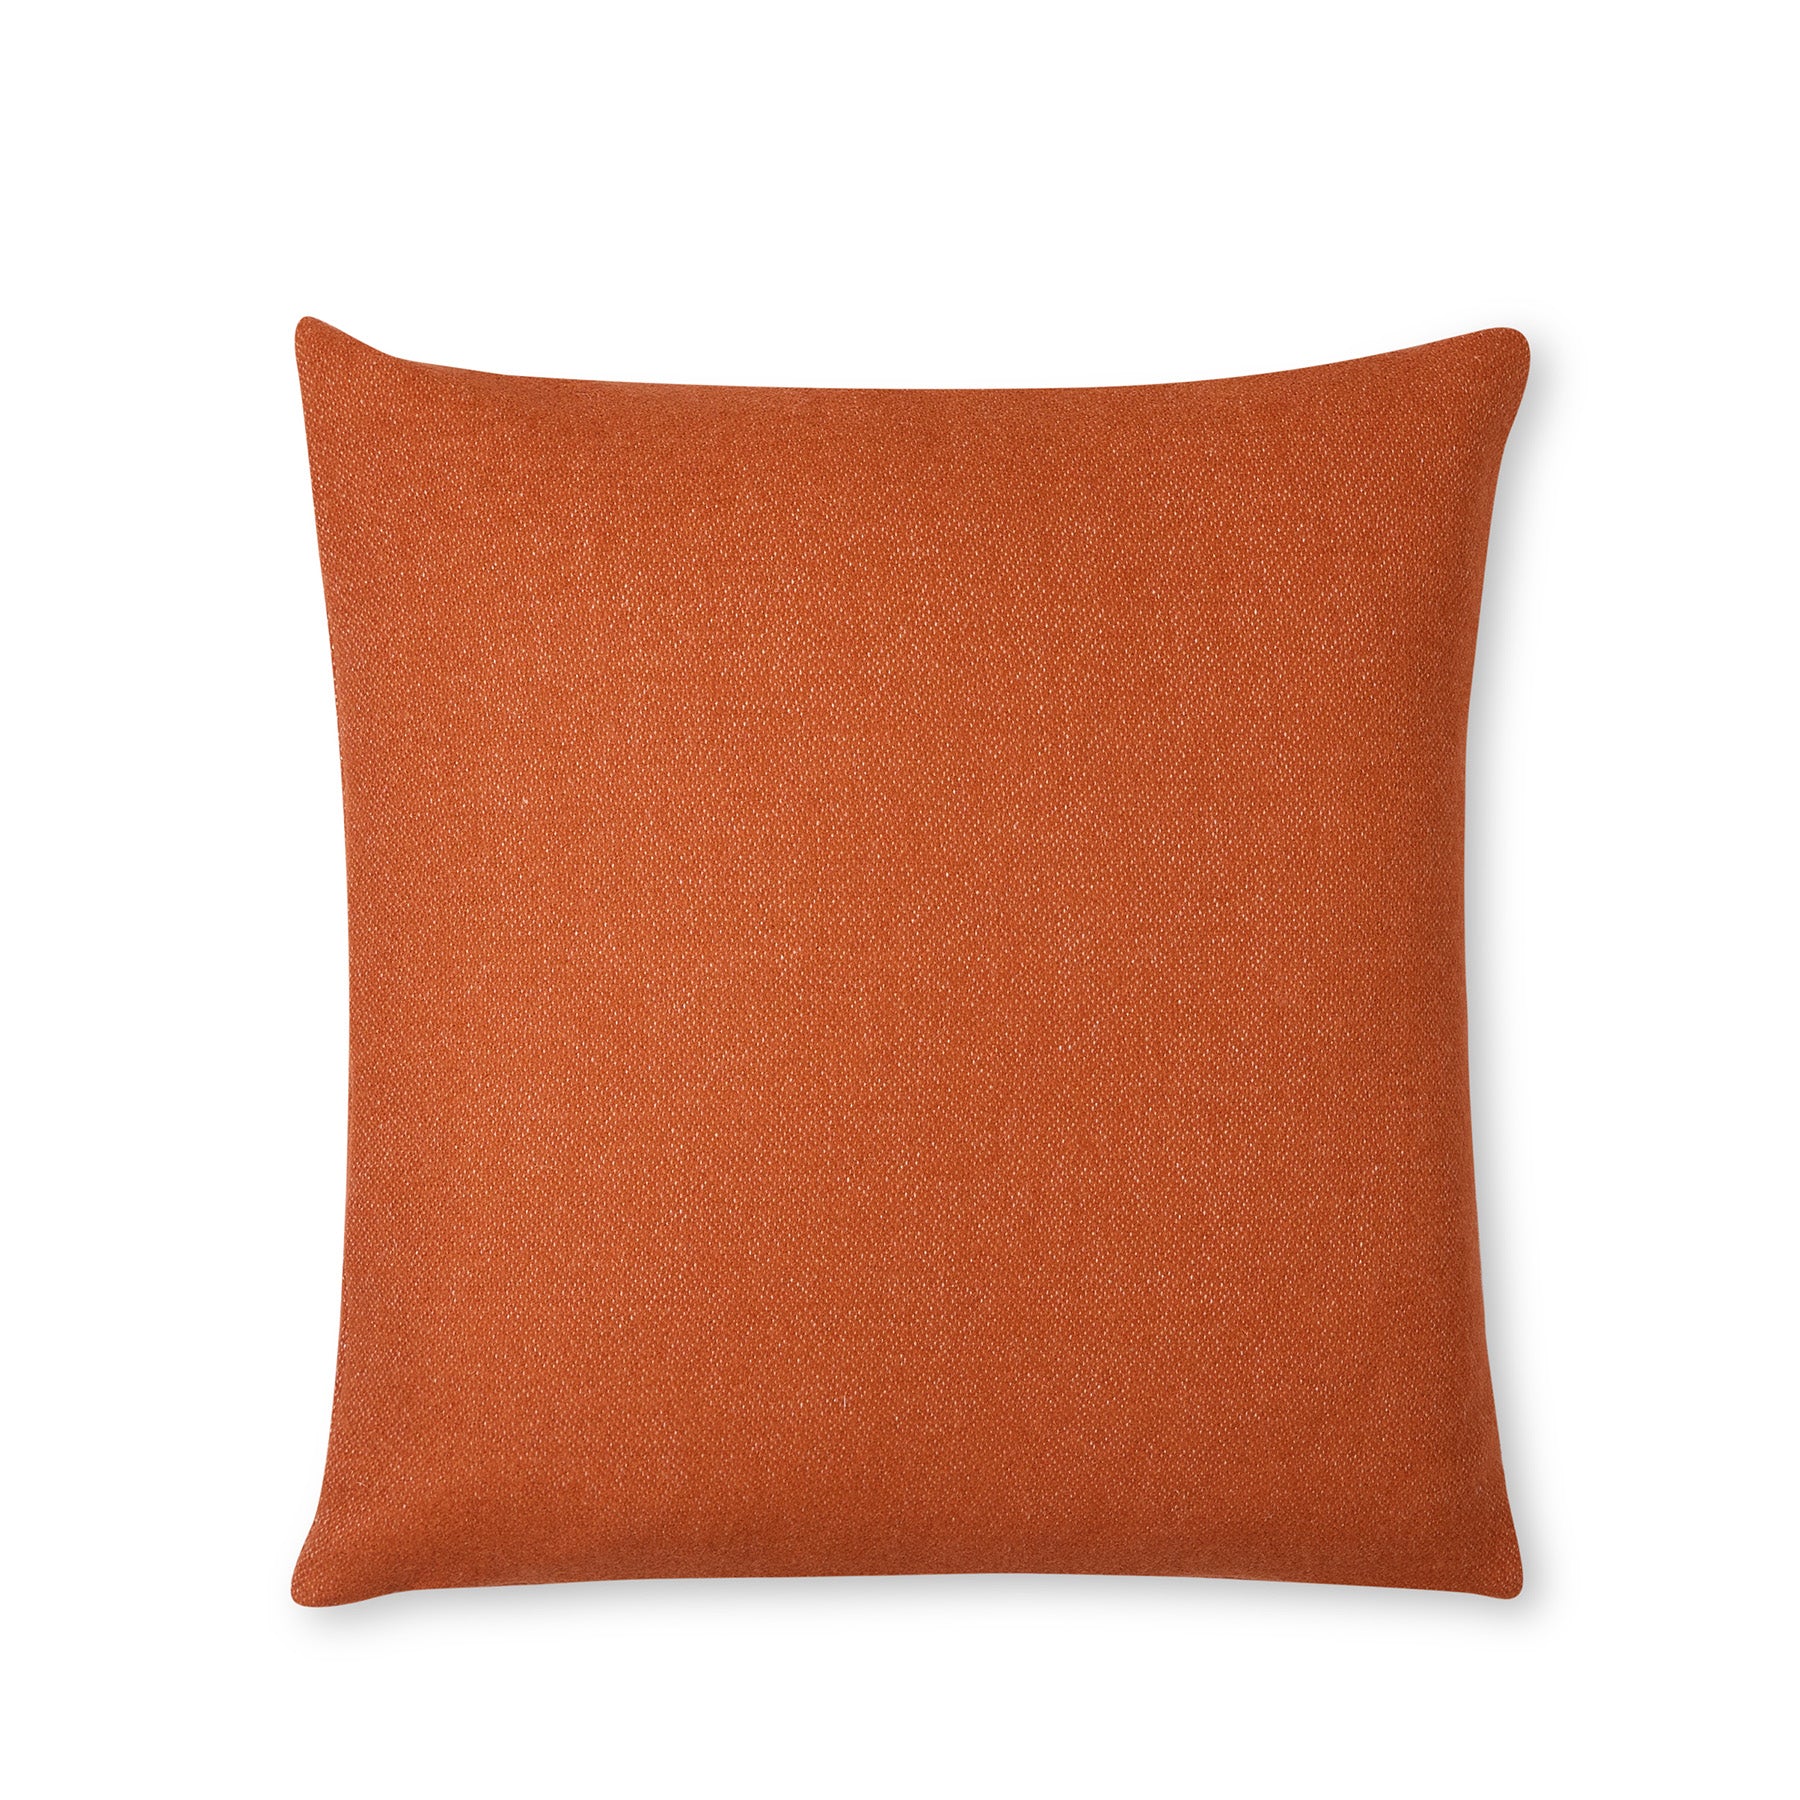 Stemor Pillow in Rust Zoom Image 1